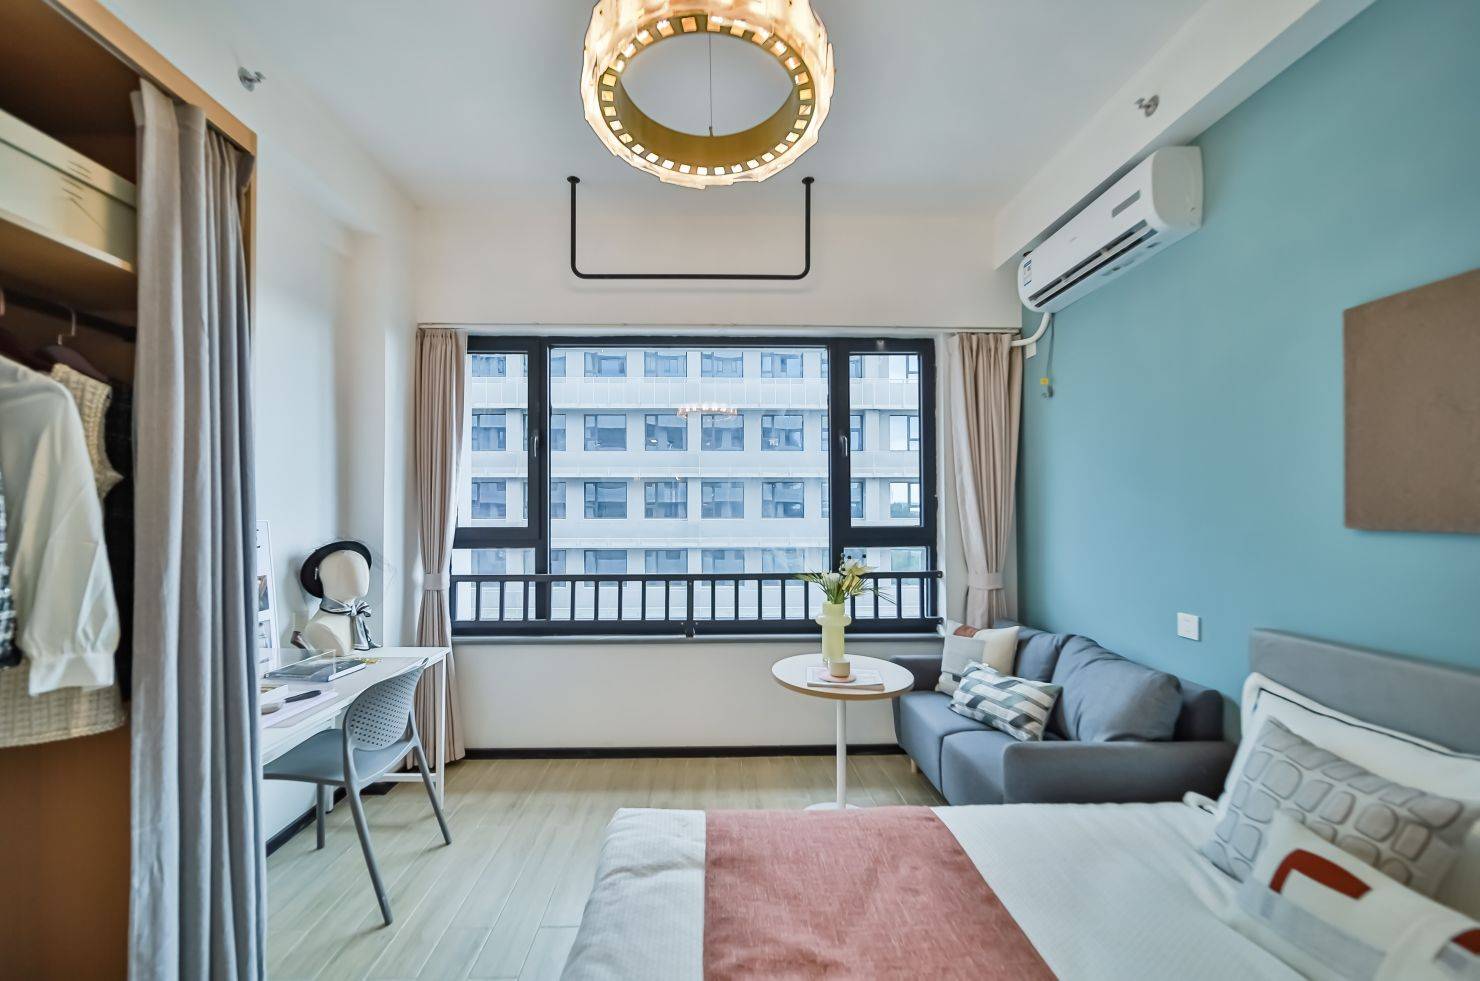 Nanjing-Qixia-Cozy Home,Clean&Comfy,No Gender Limit,Hustle & Bustle